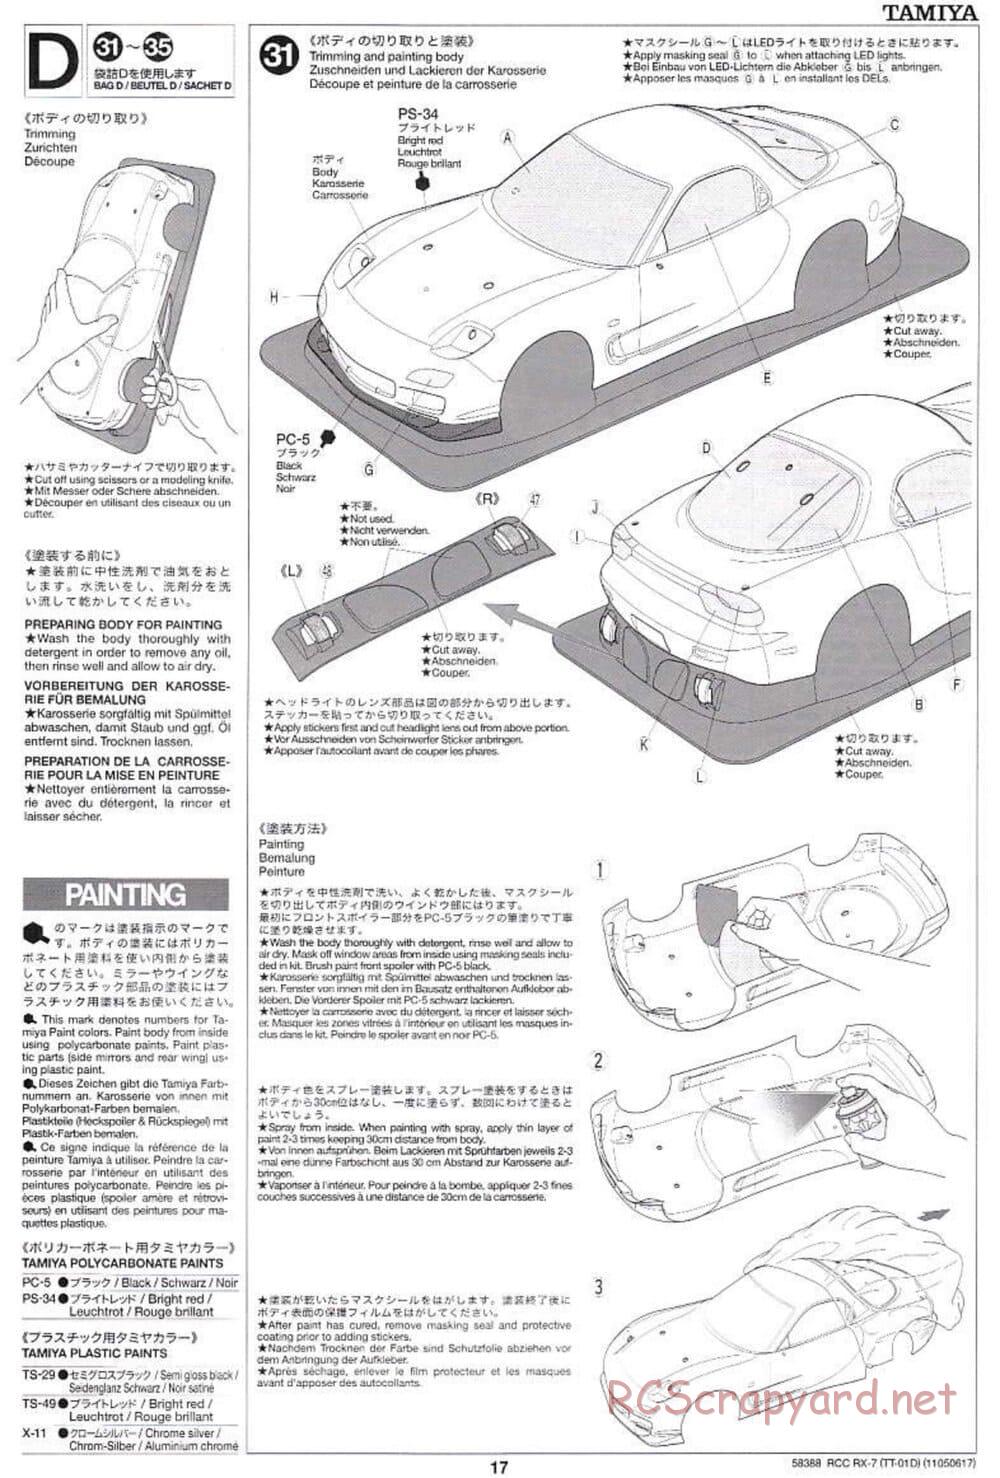 Tamiya - Mazda RX-7 - Drift Spec - TT-01D Chassis - Manual - Page 17